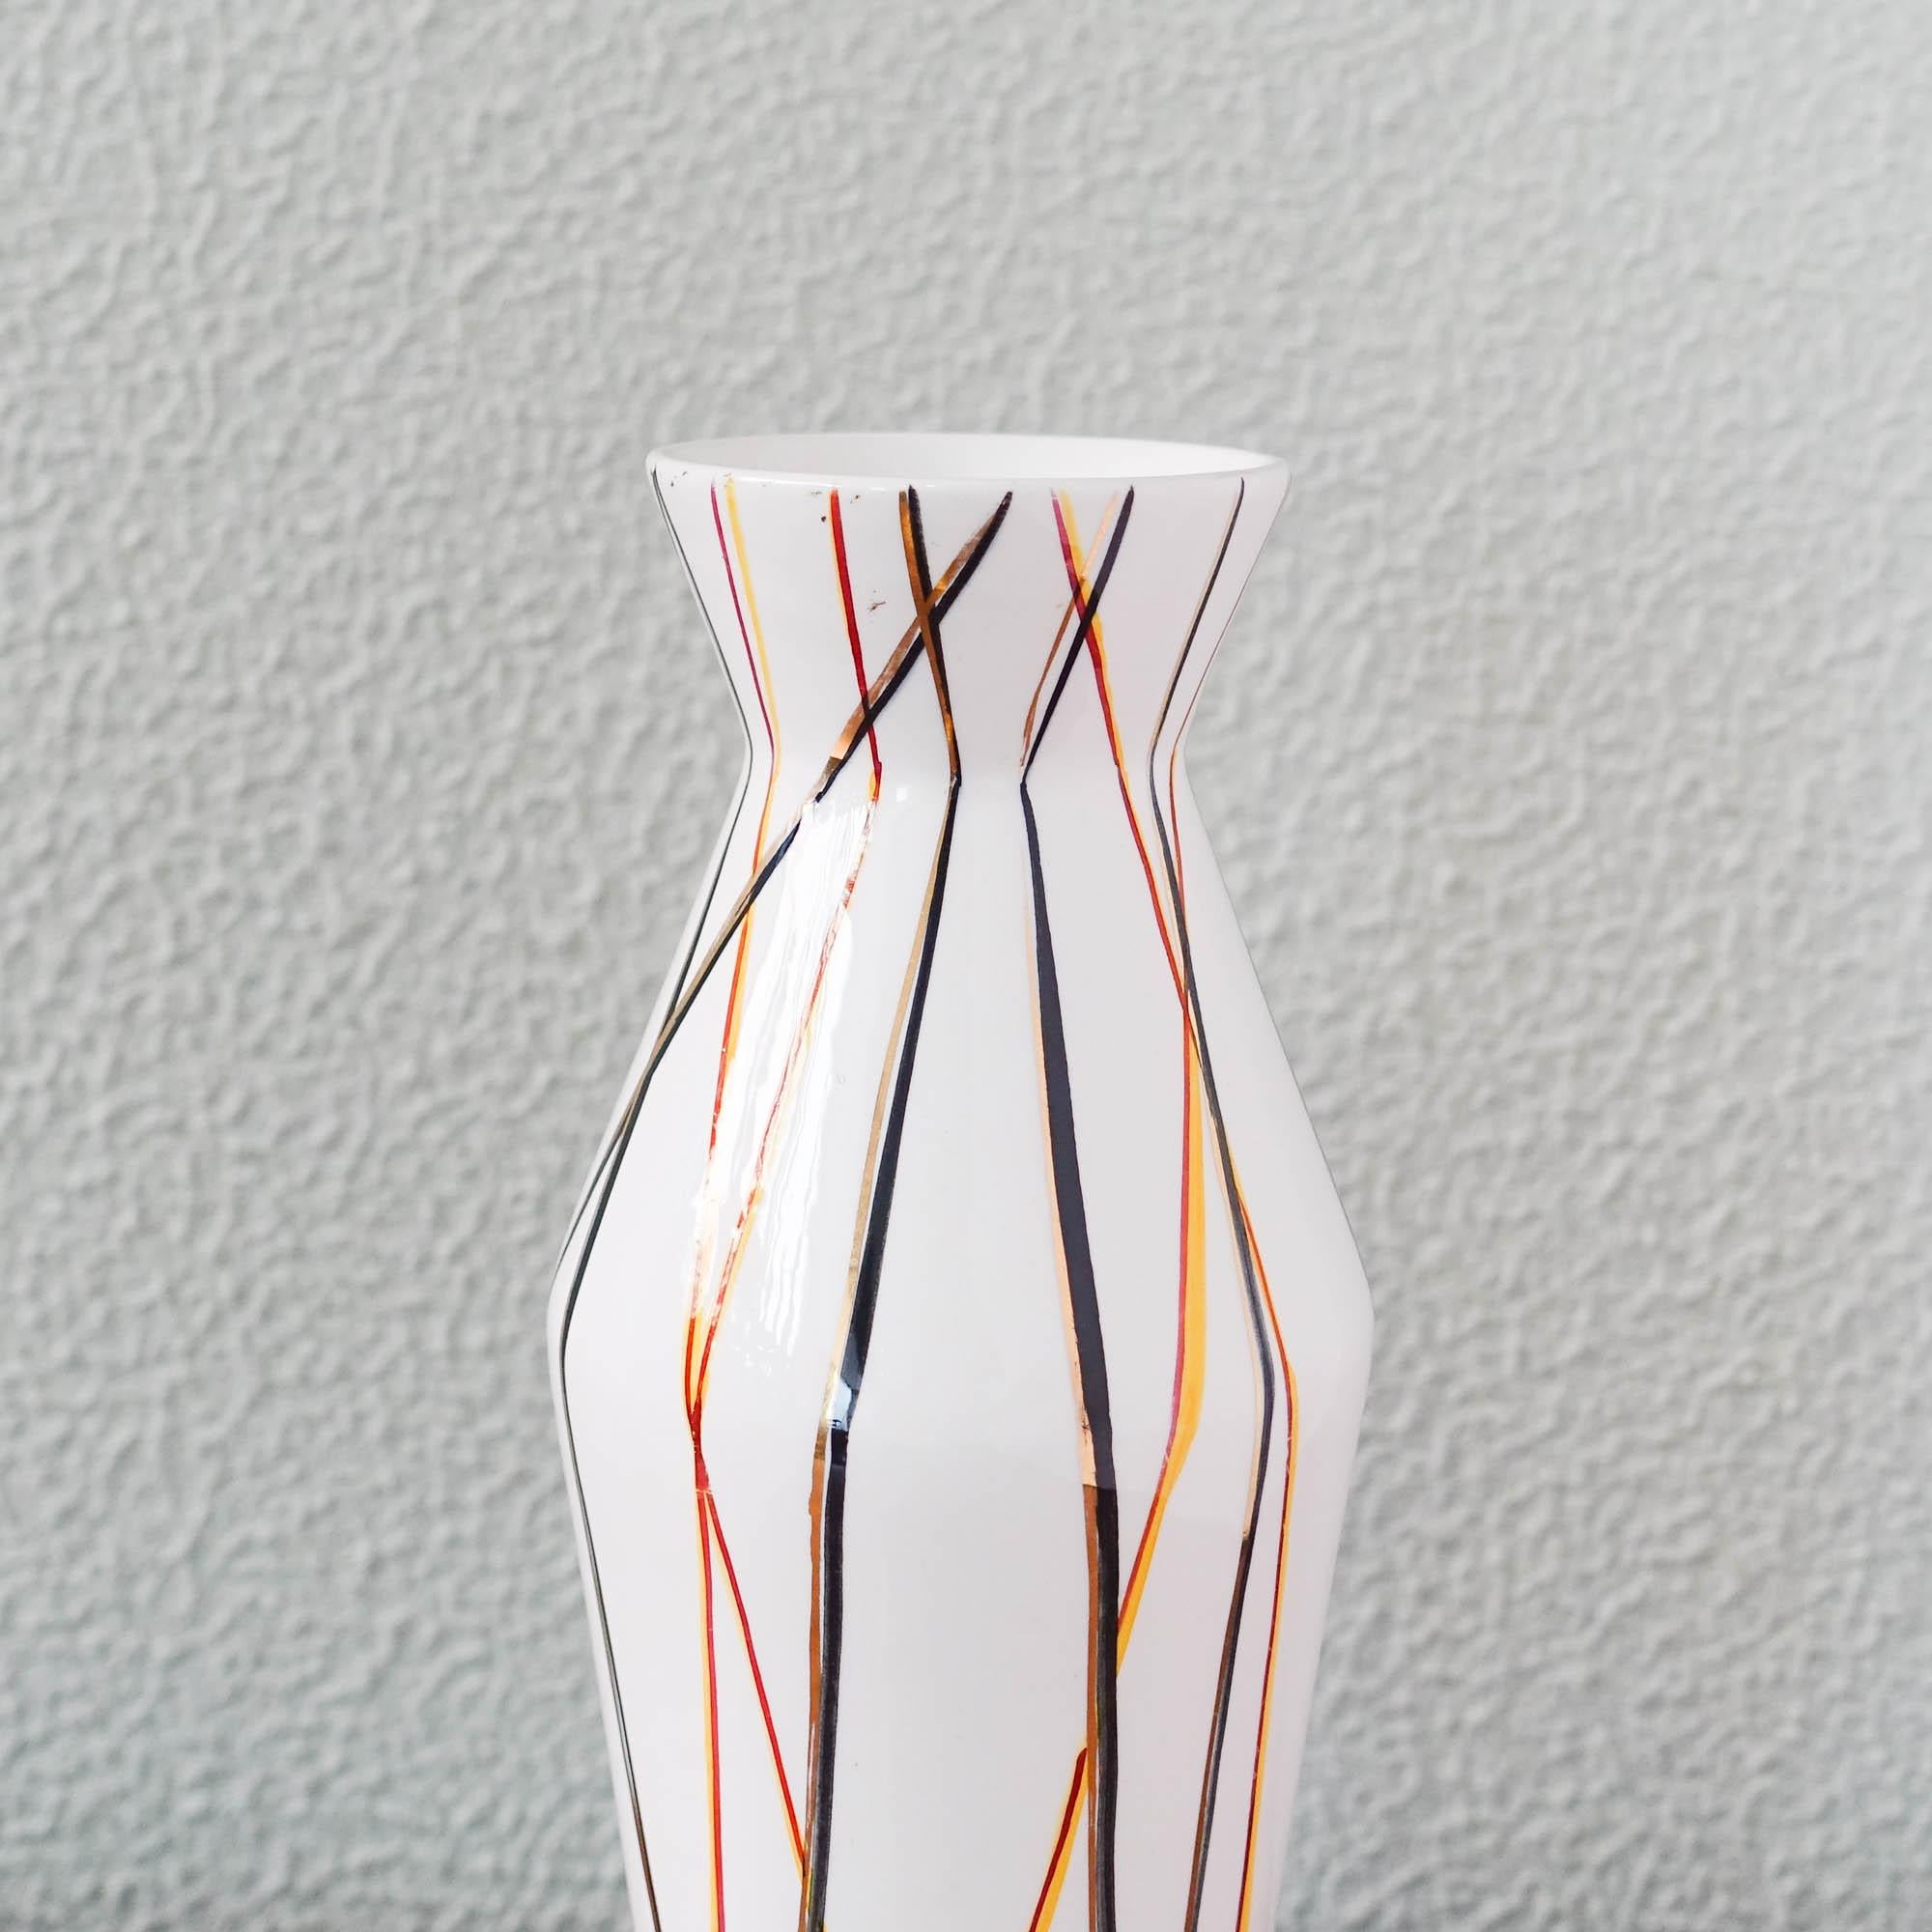 Portuguese Modernist Flower Vase in Ceramic, by Vitriv, Portugal, 1950's For Sale